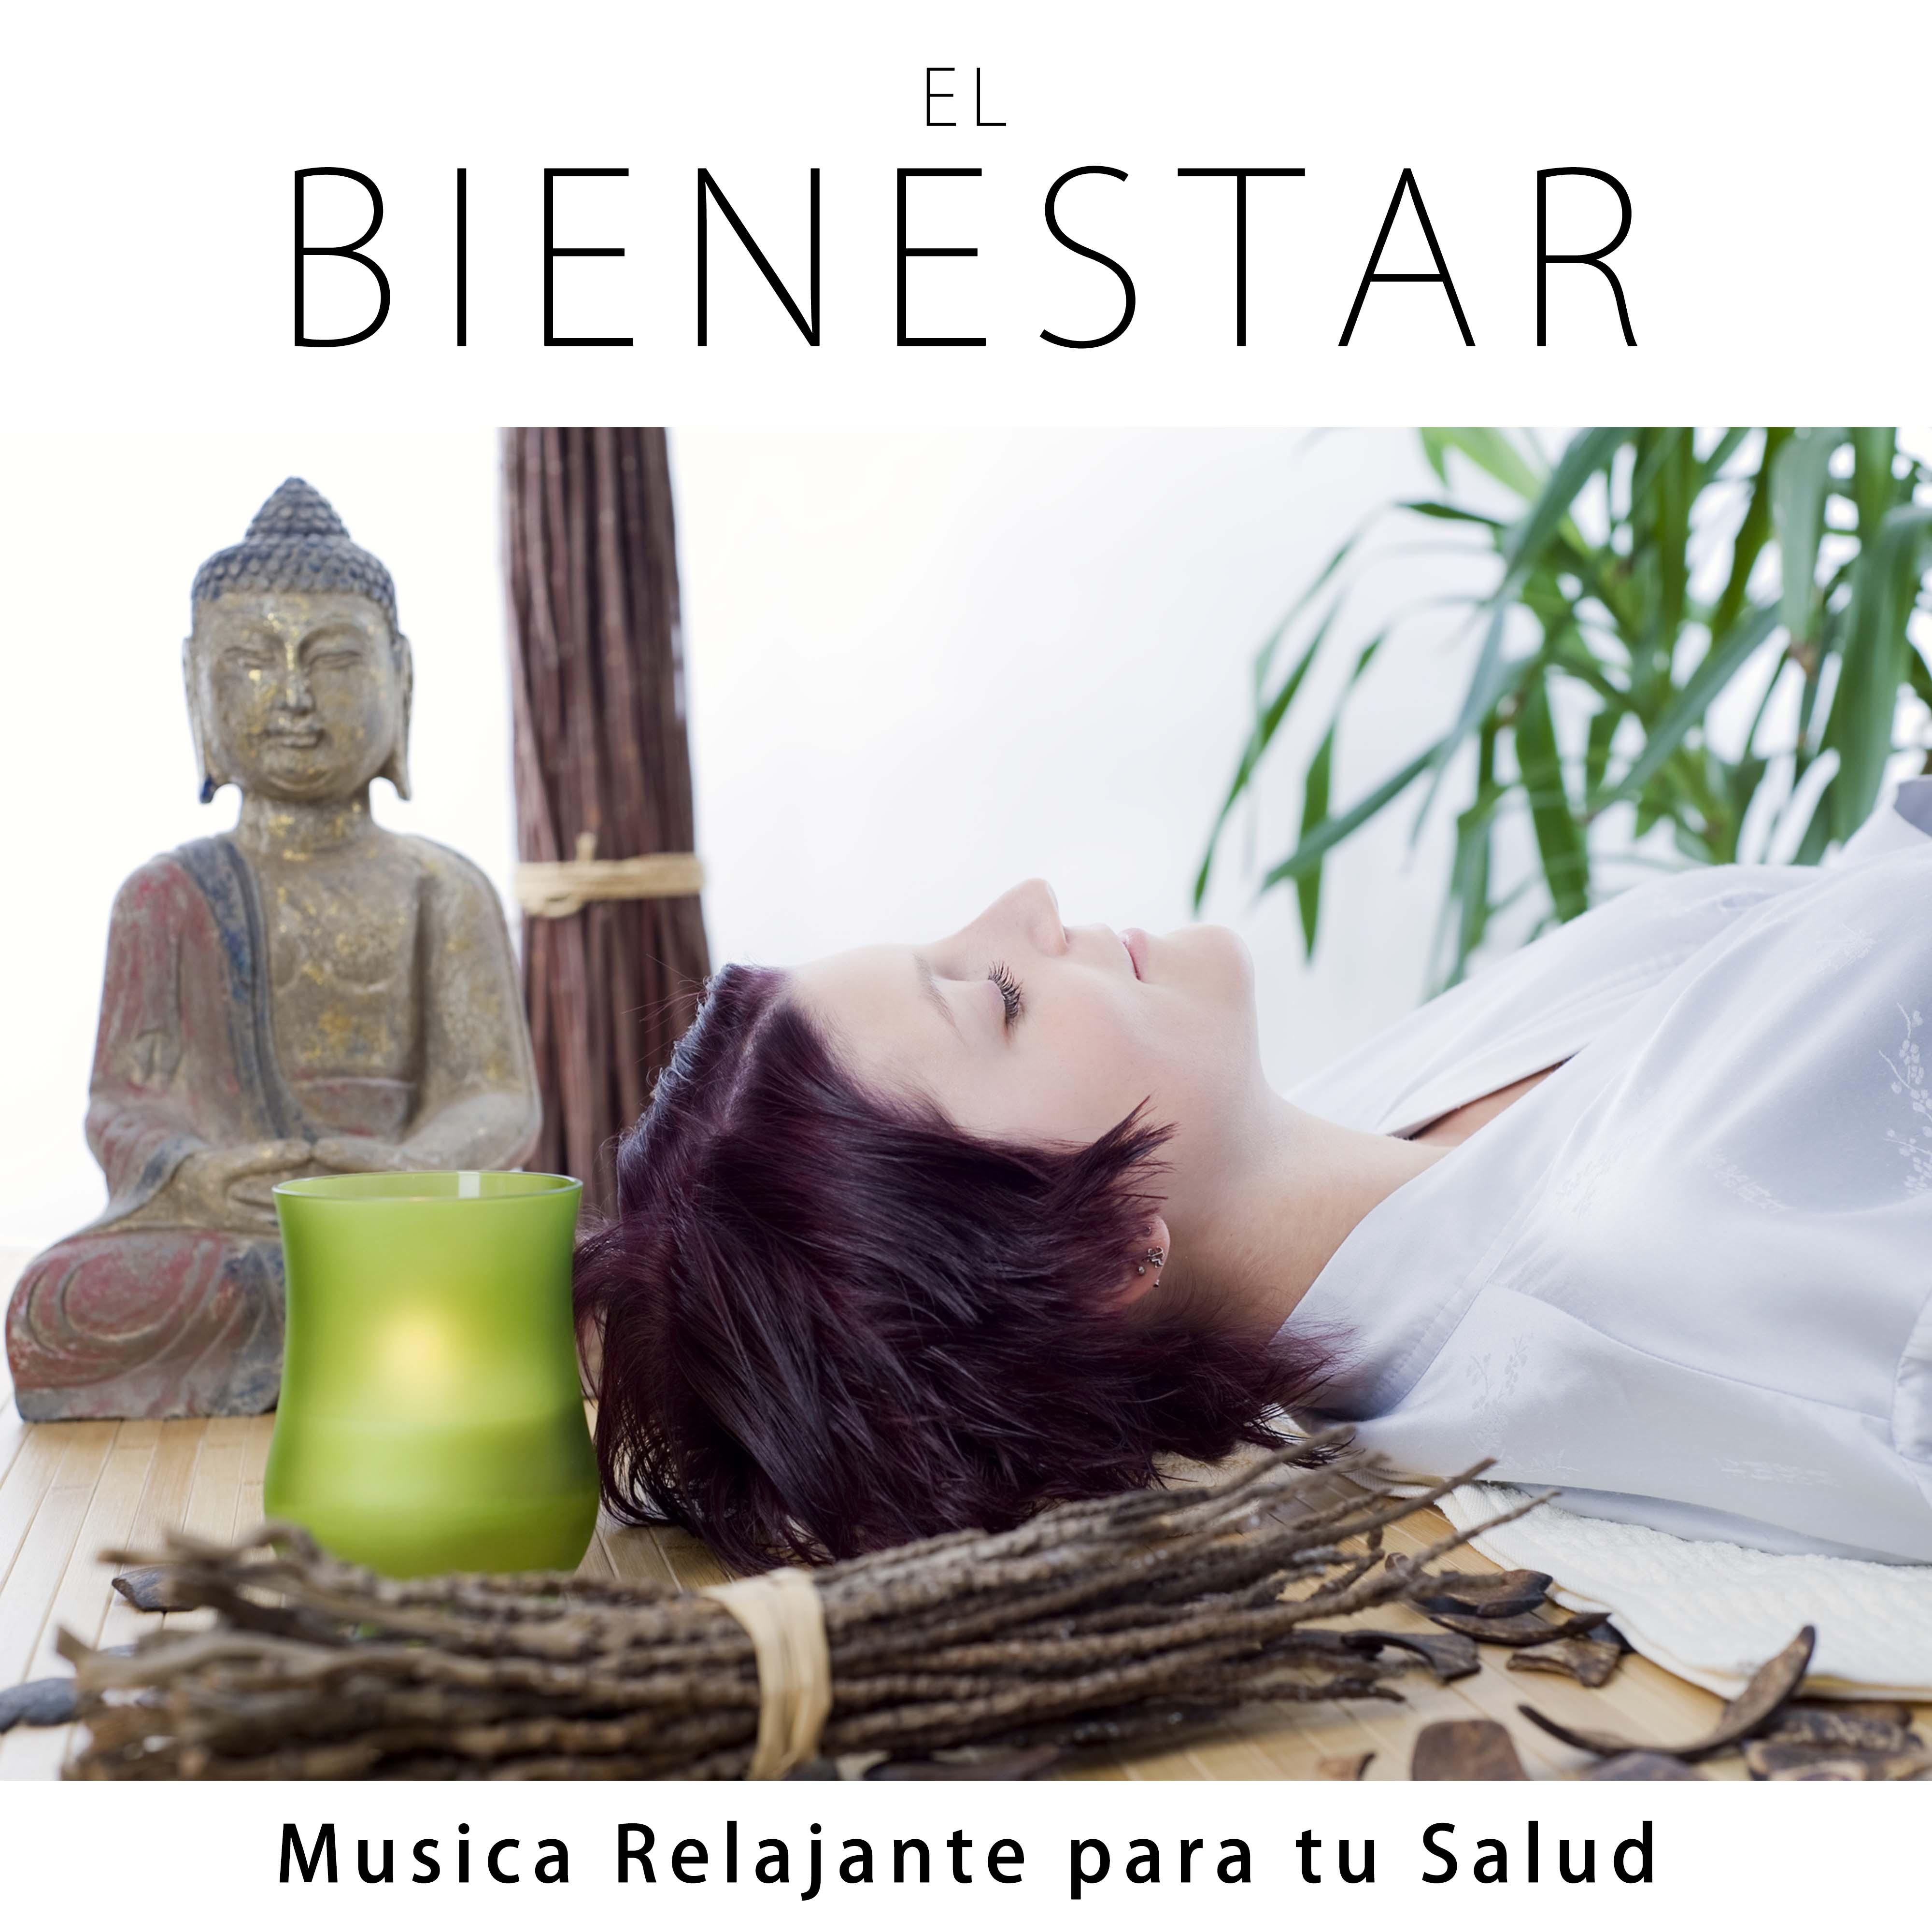 Bienestar - Musica Relajante para tu Salud